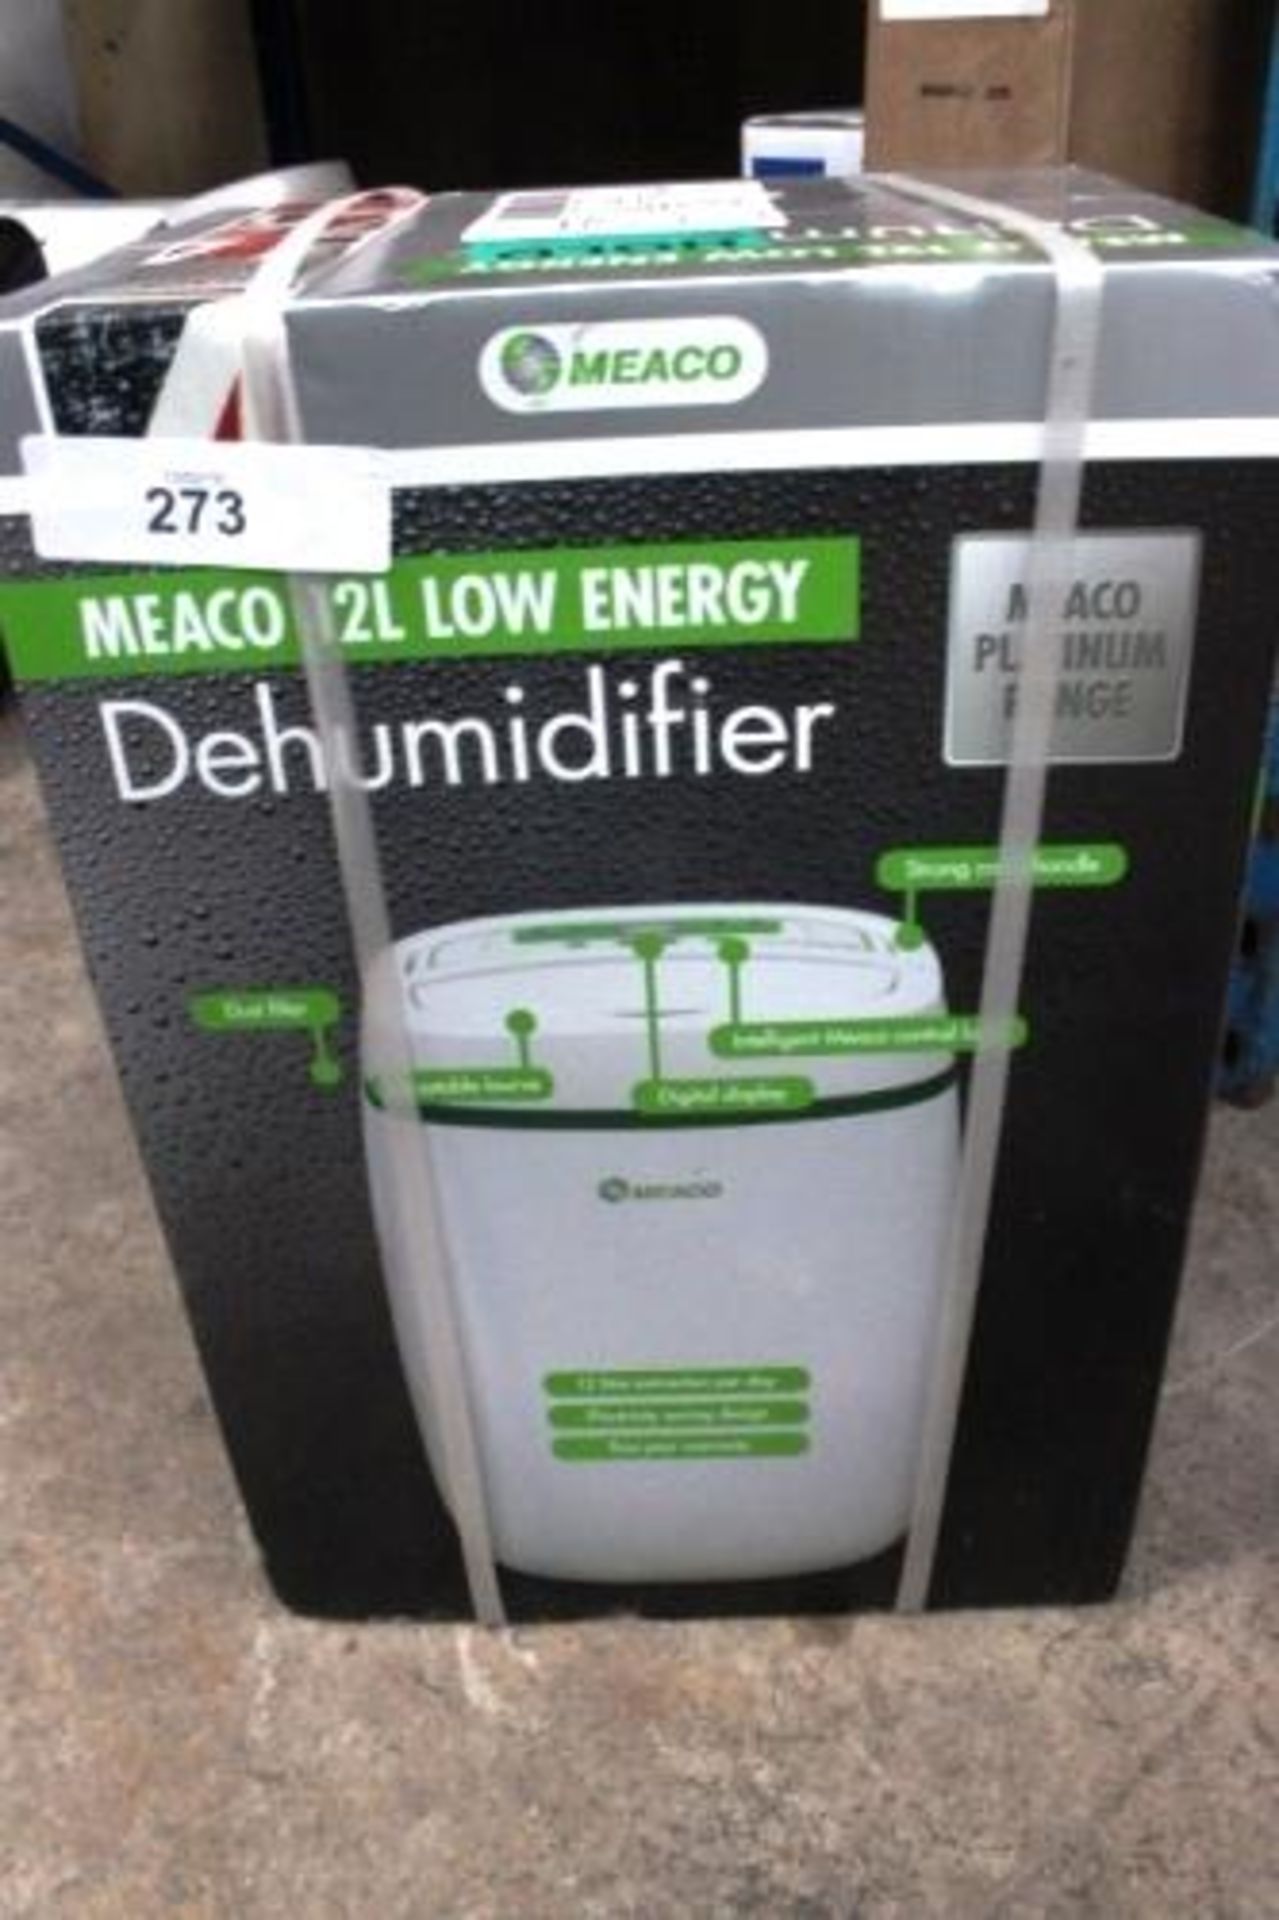 A Meaco 12ltr low energy dehumidifier, model MPR180800092 - Sealed new in box (ESB3)